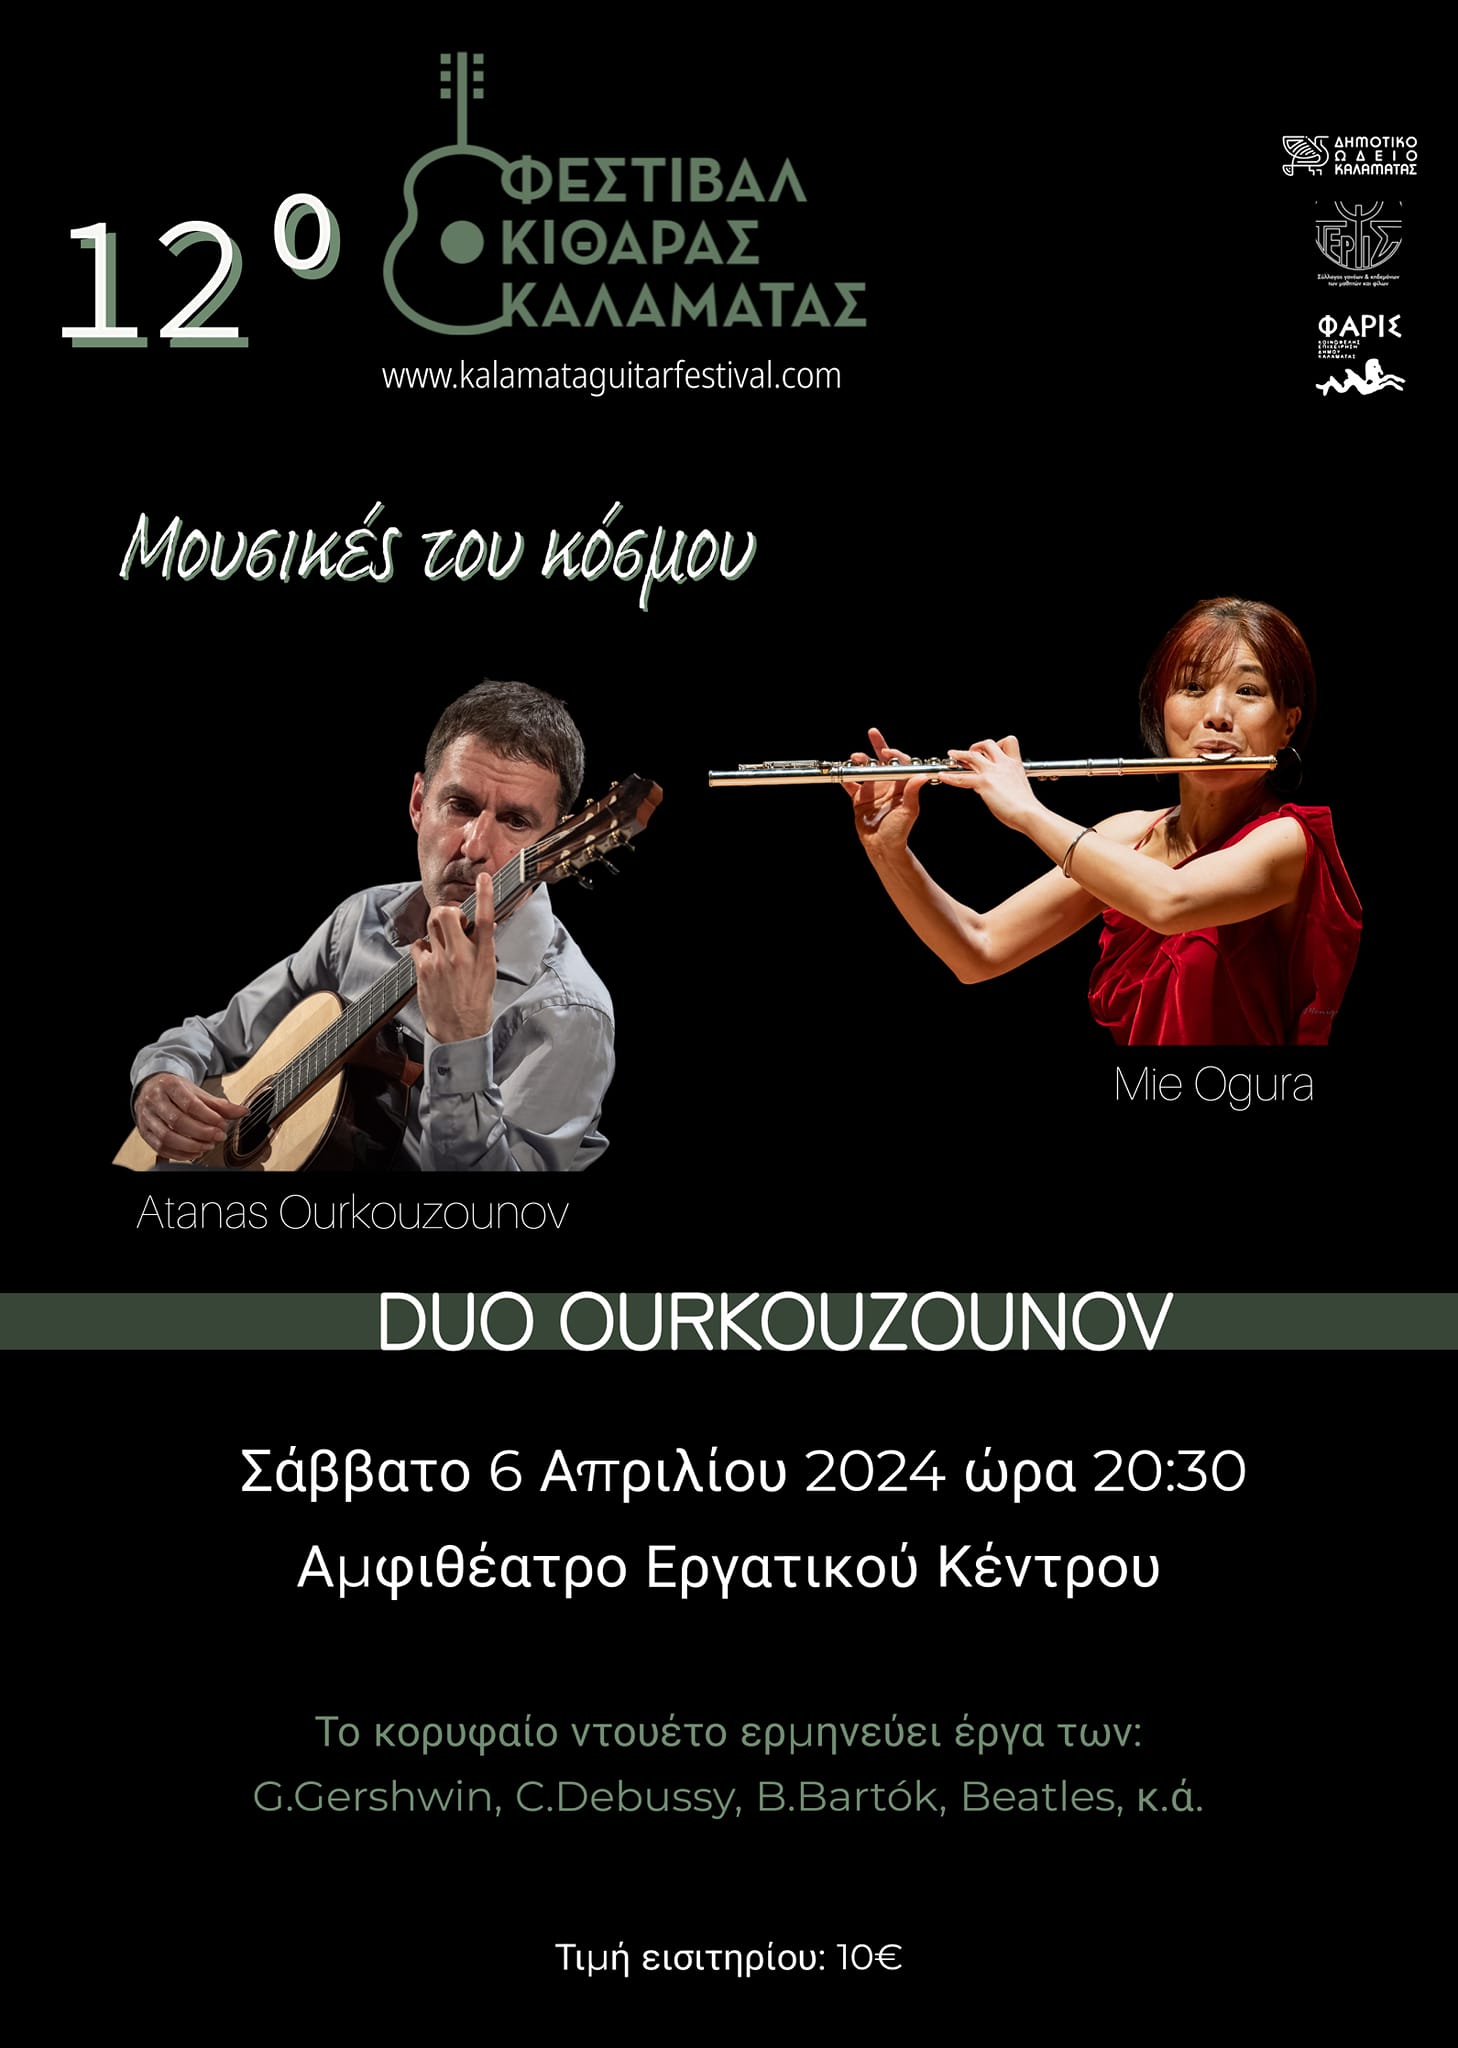 Duo Ourkouzounov